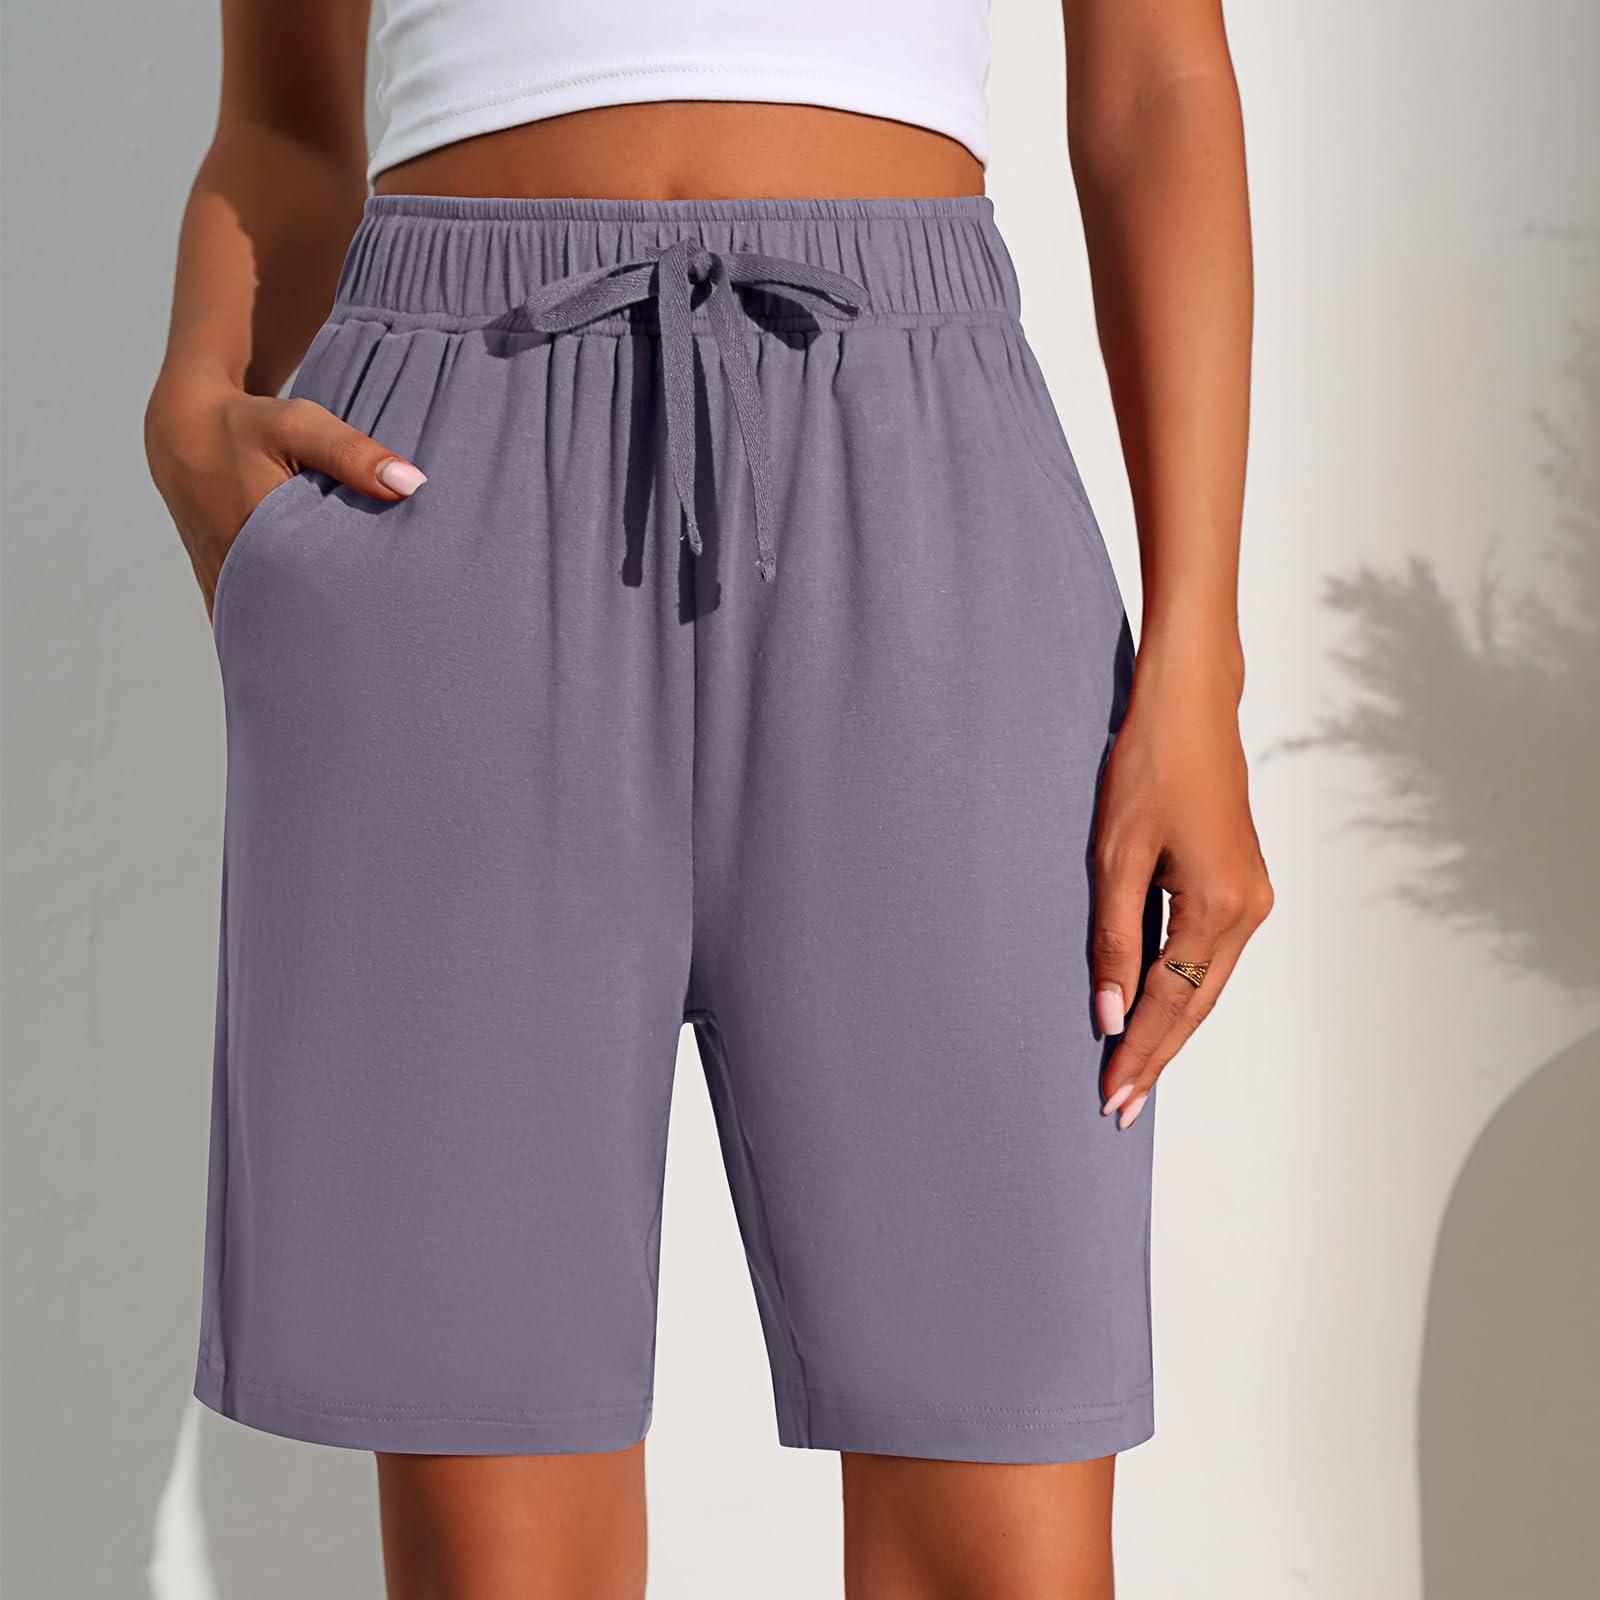 Neer 3 Pack Women's Shorts Quick Dry Shorts Women Drawstring High Waisted Shorts Womens Bermuda Athletic Shorts with Pockets (Black,White,Dark Grey,Large) - Bona Fide Fashion